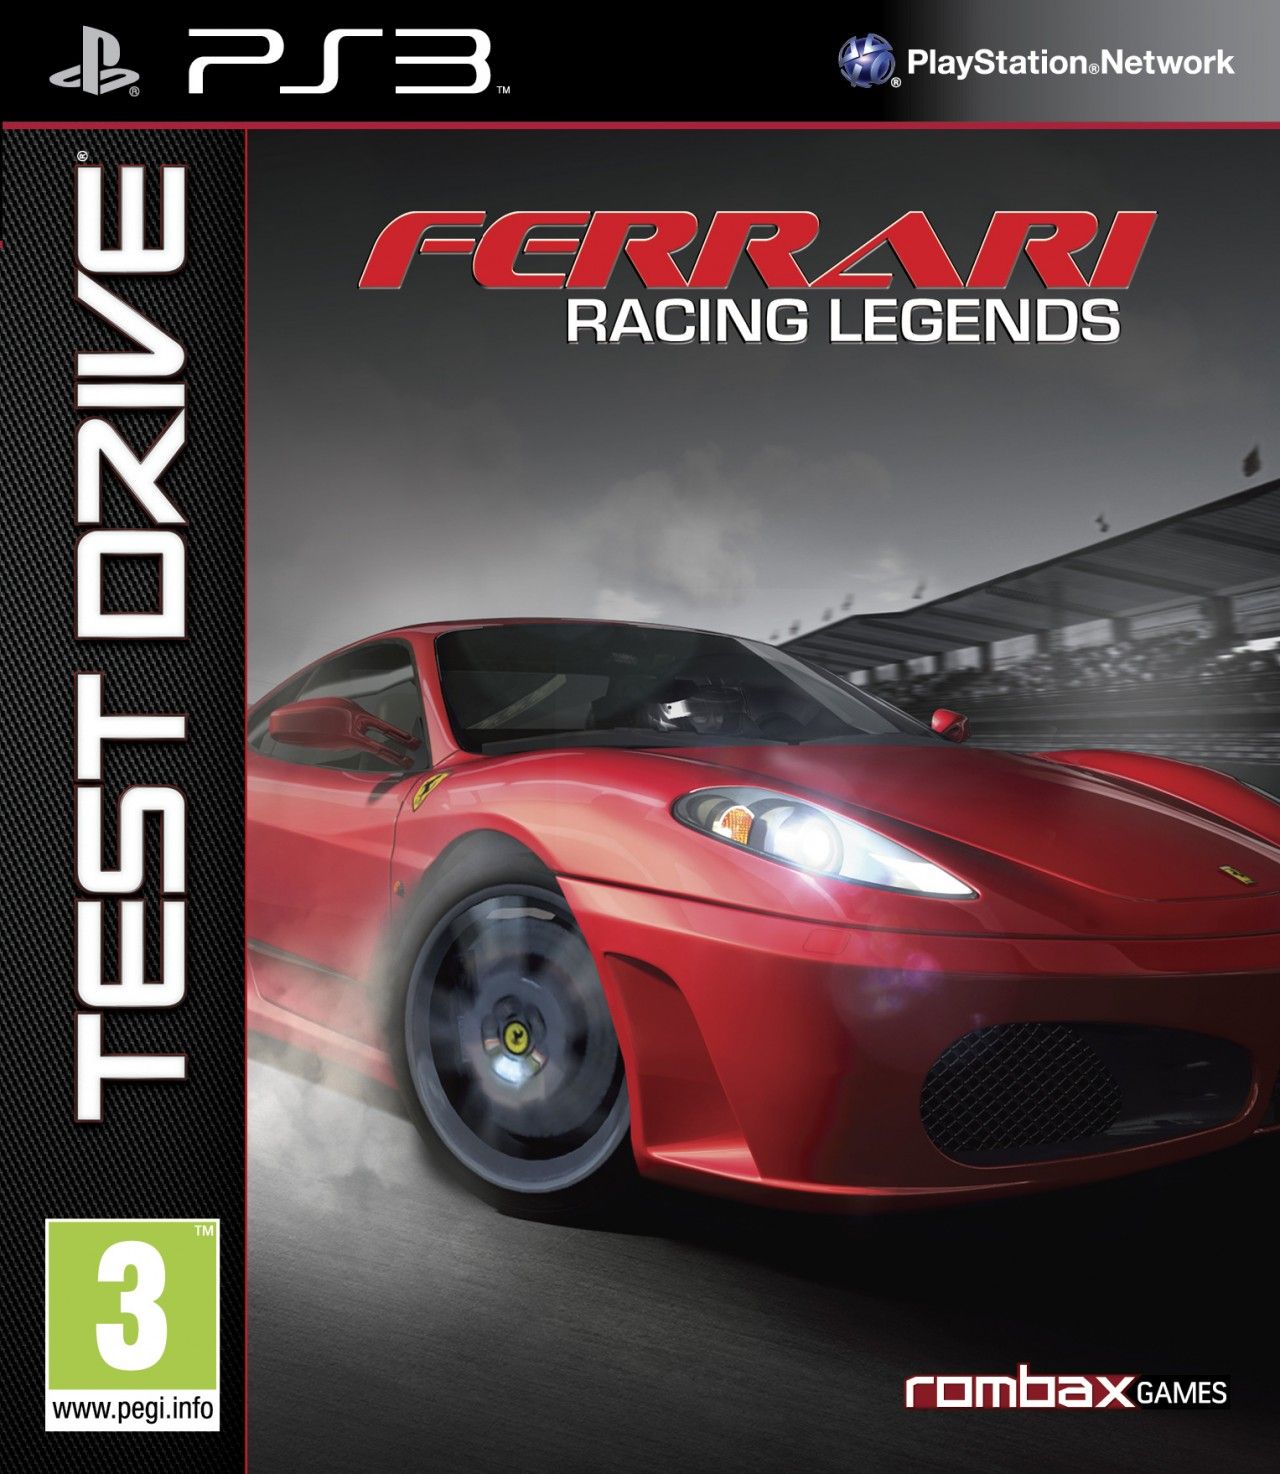 download free test drive ferrari racing legends pc